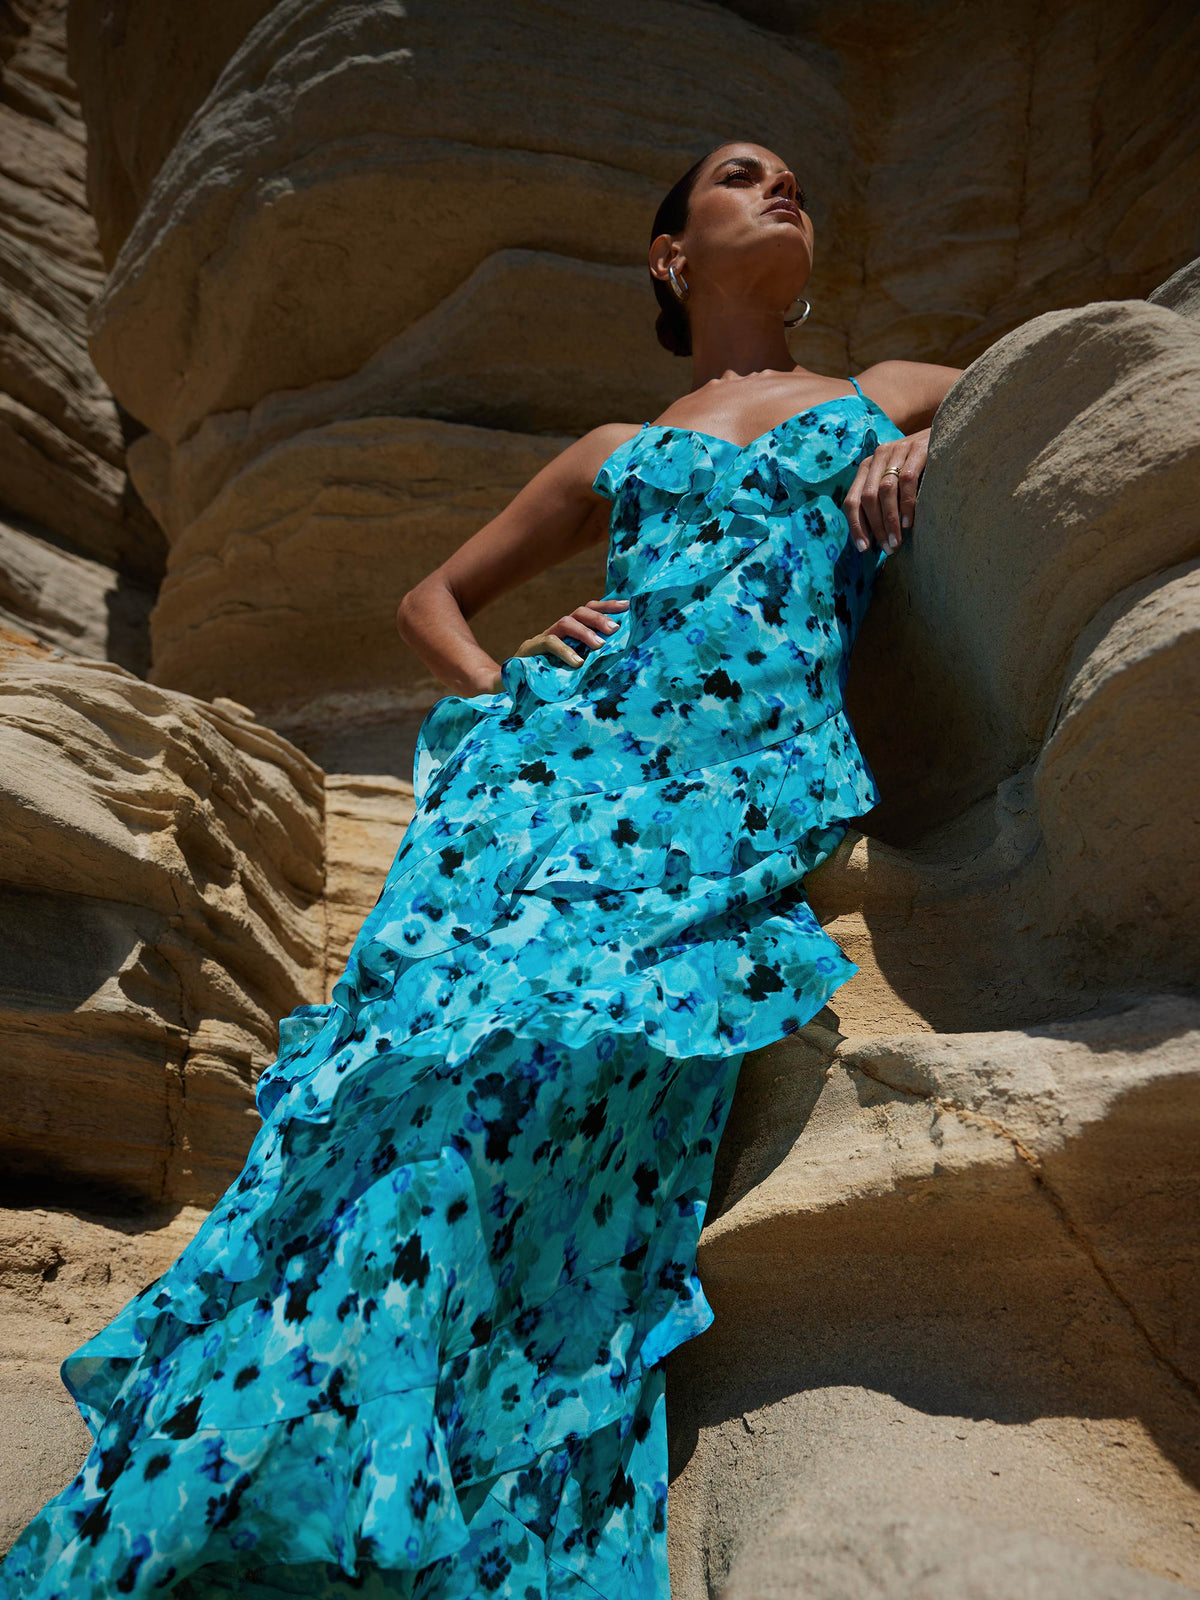 Kirstee Blue Floral Print Ruffle Cami Maxi Dress